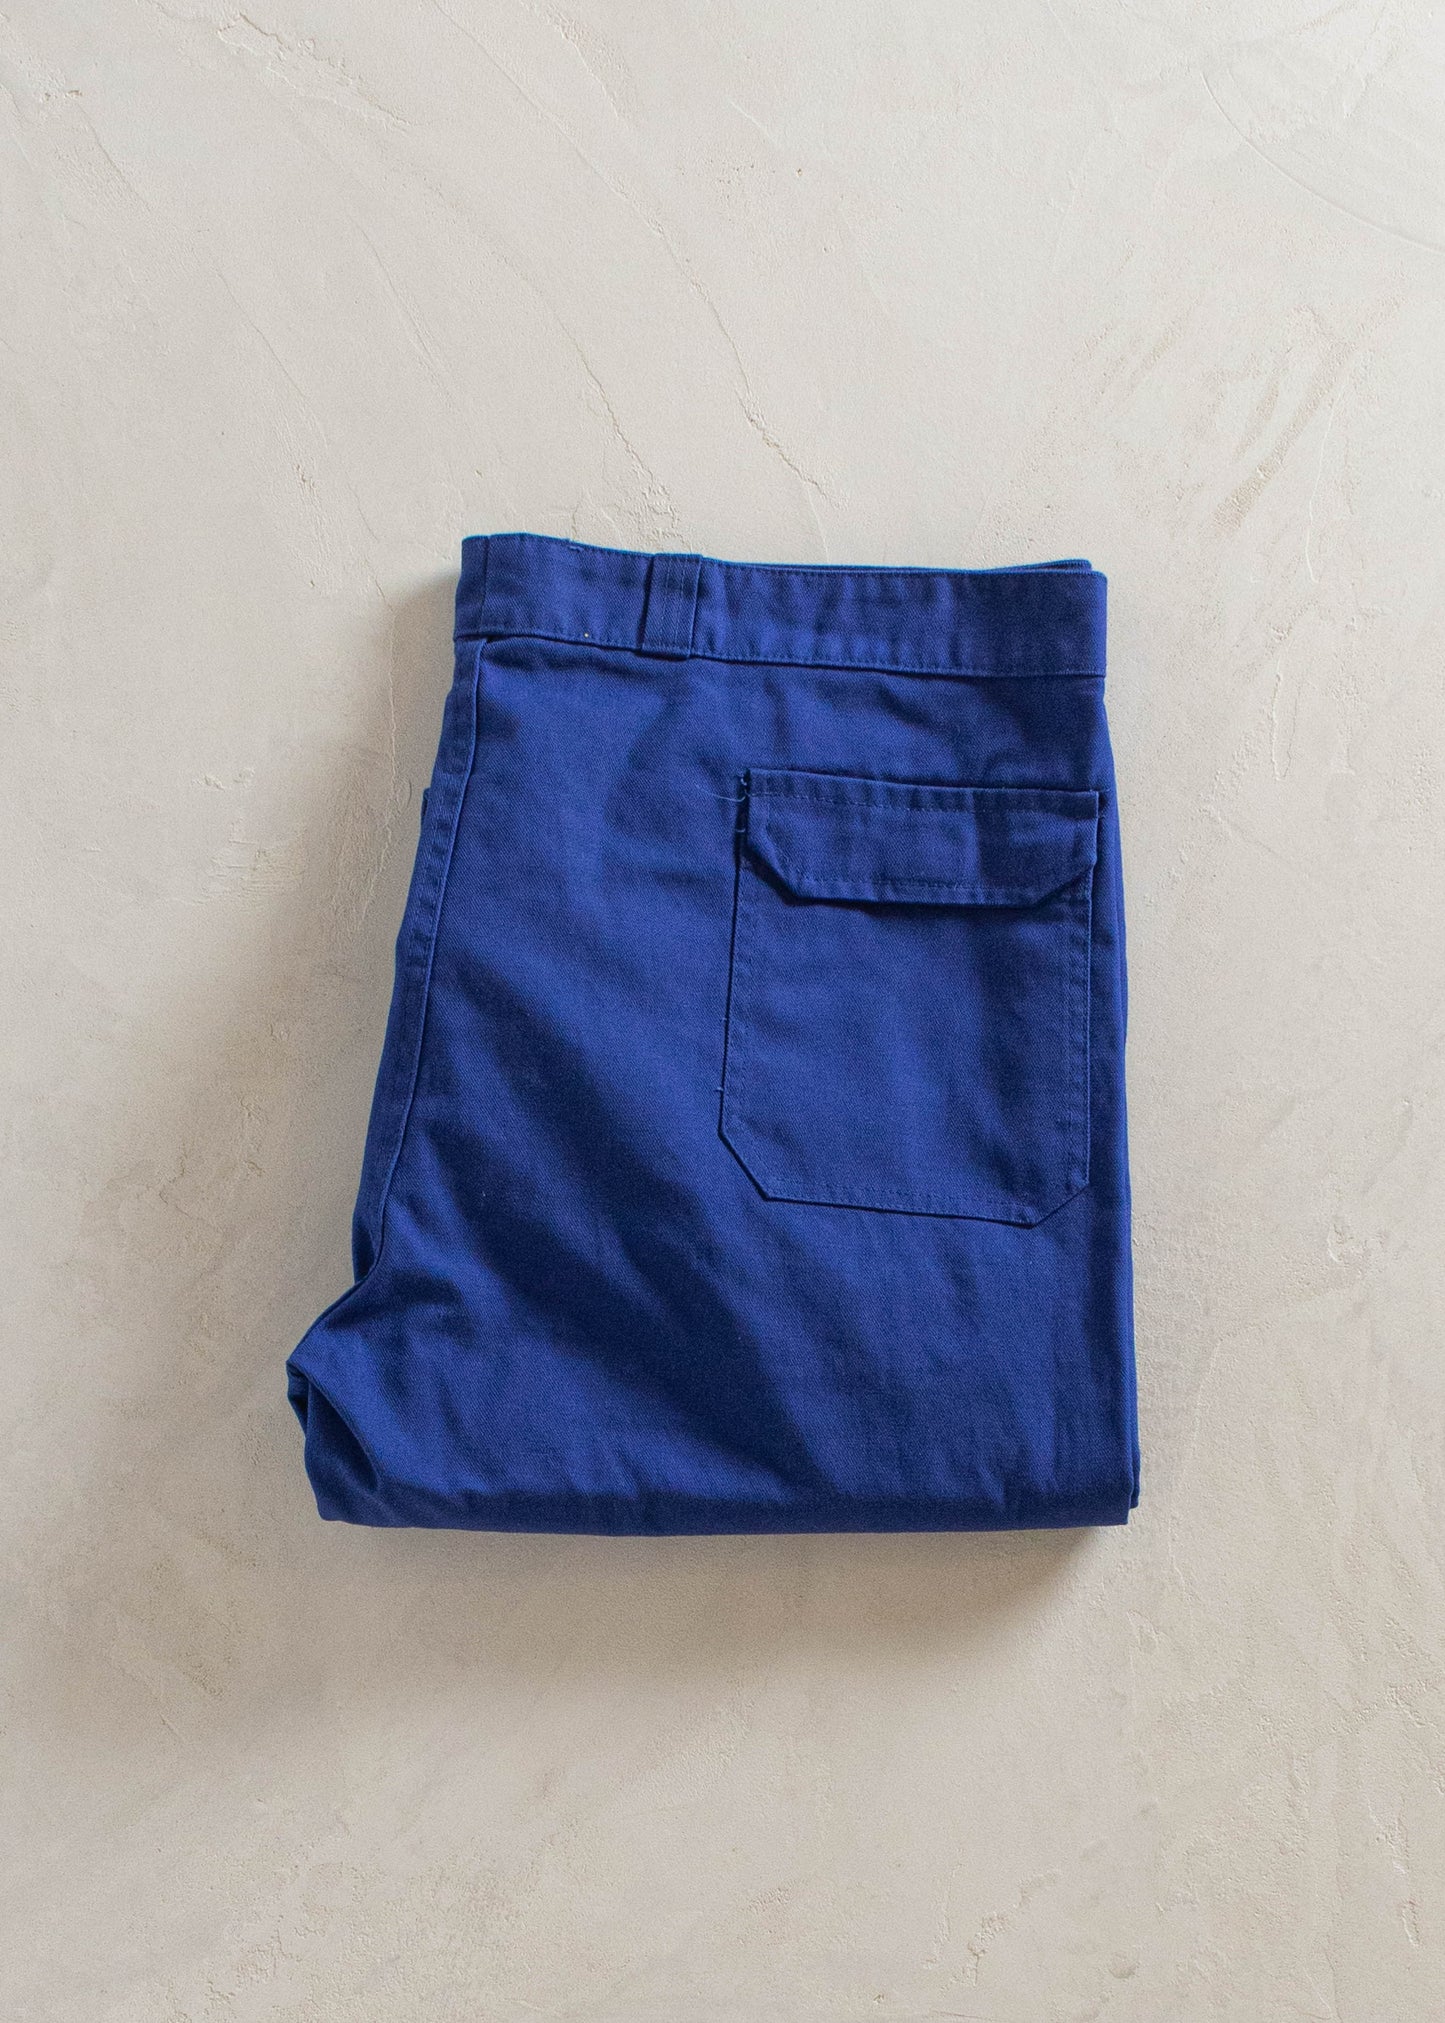 1980s Macober French Workwear Chore Pants Size Women's 40 Men's 42